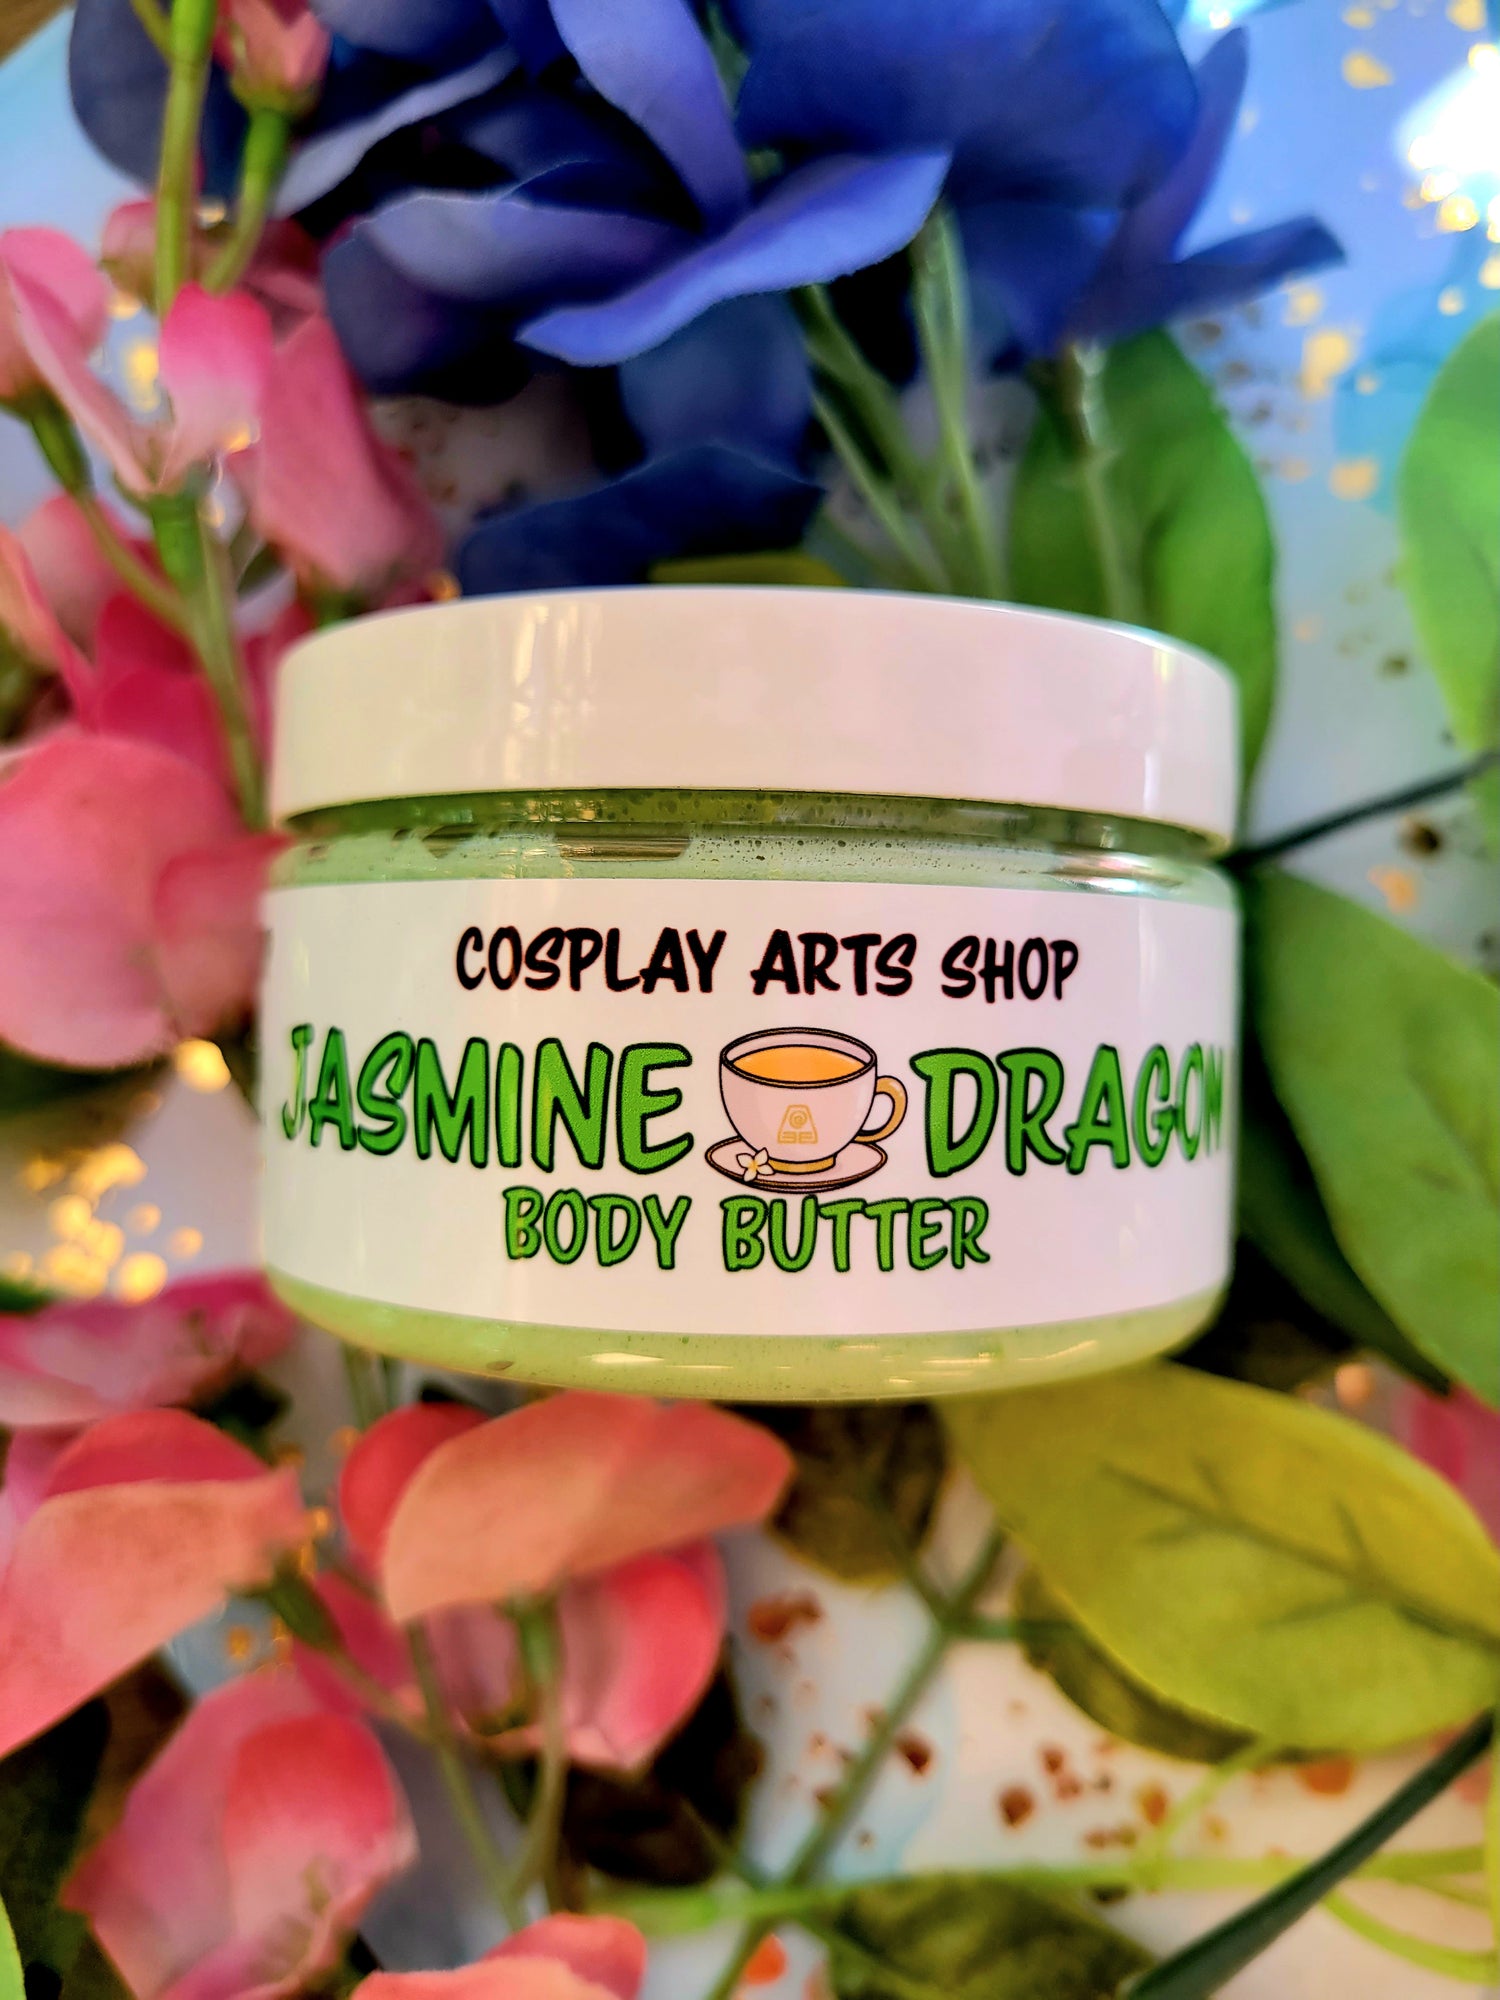 Jasmine Dragon Body Butter - Cosplay Arts Shop